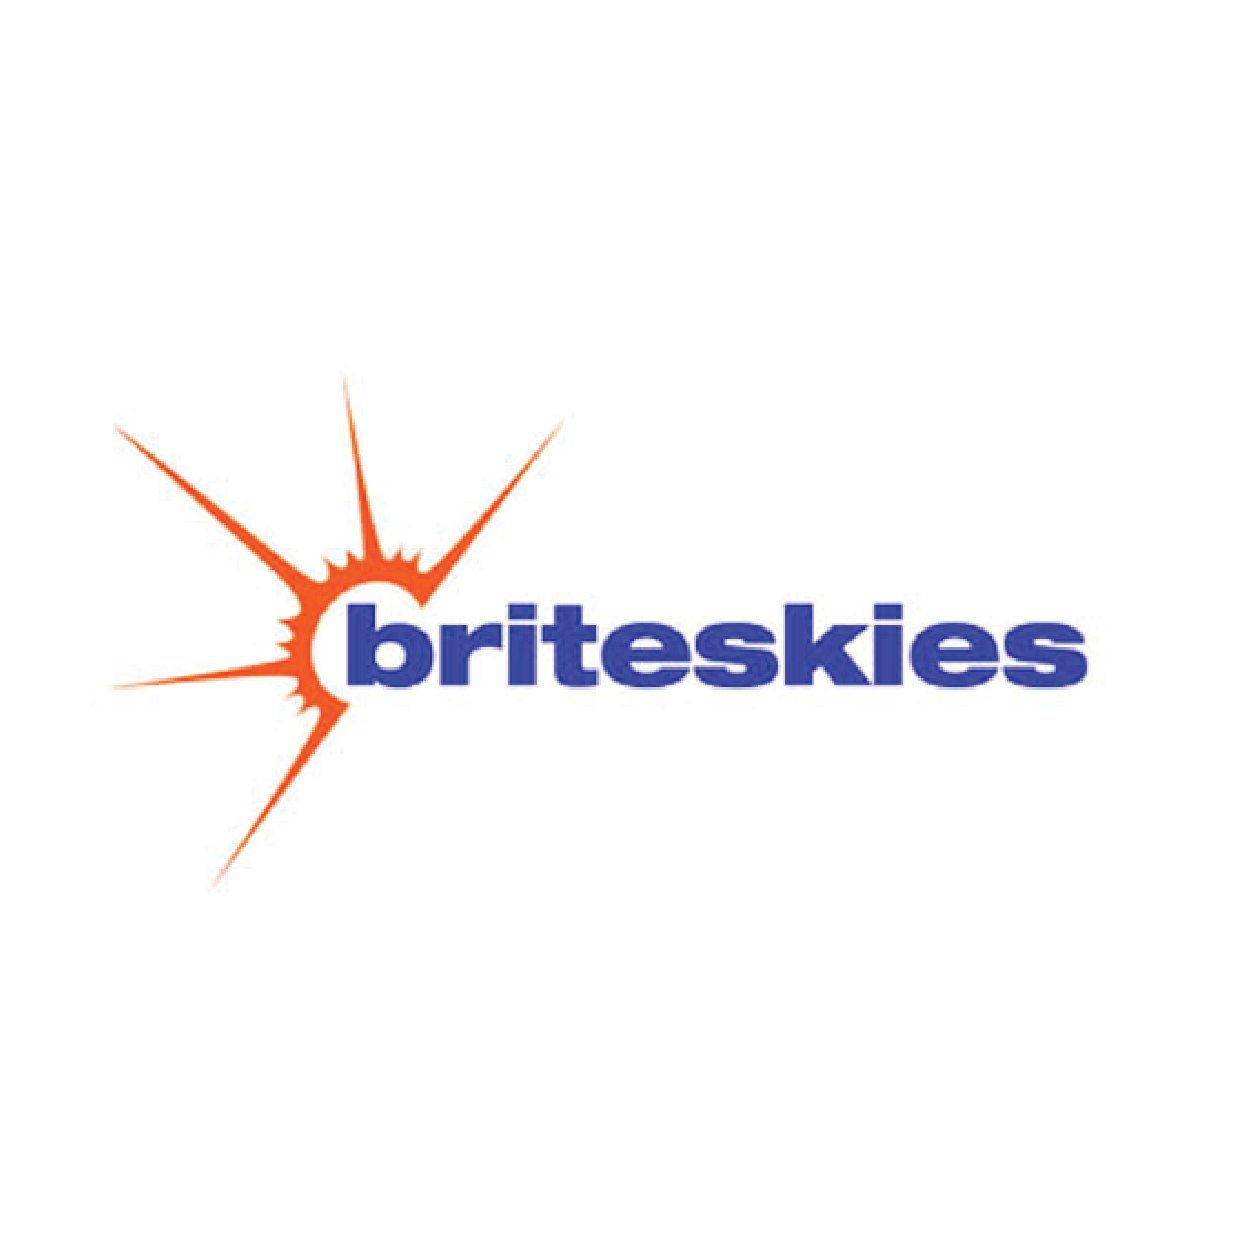 briteskies-logo-evolution-3